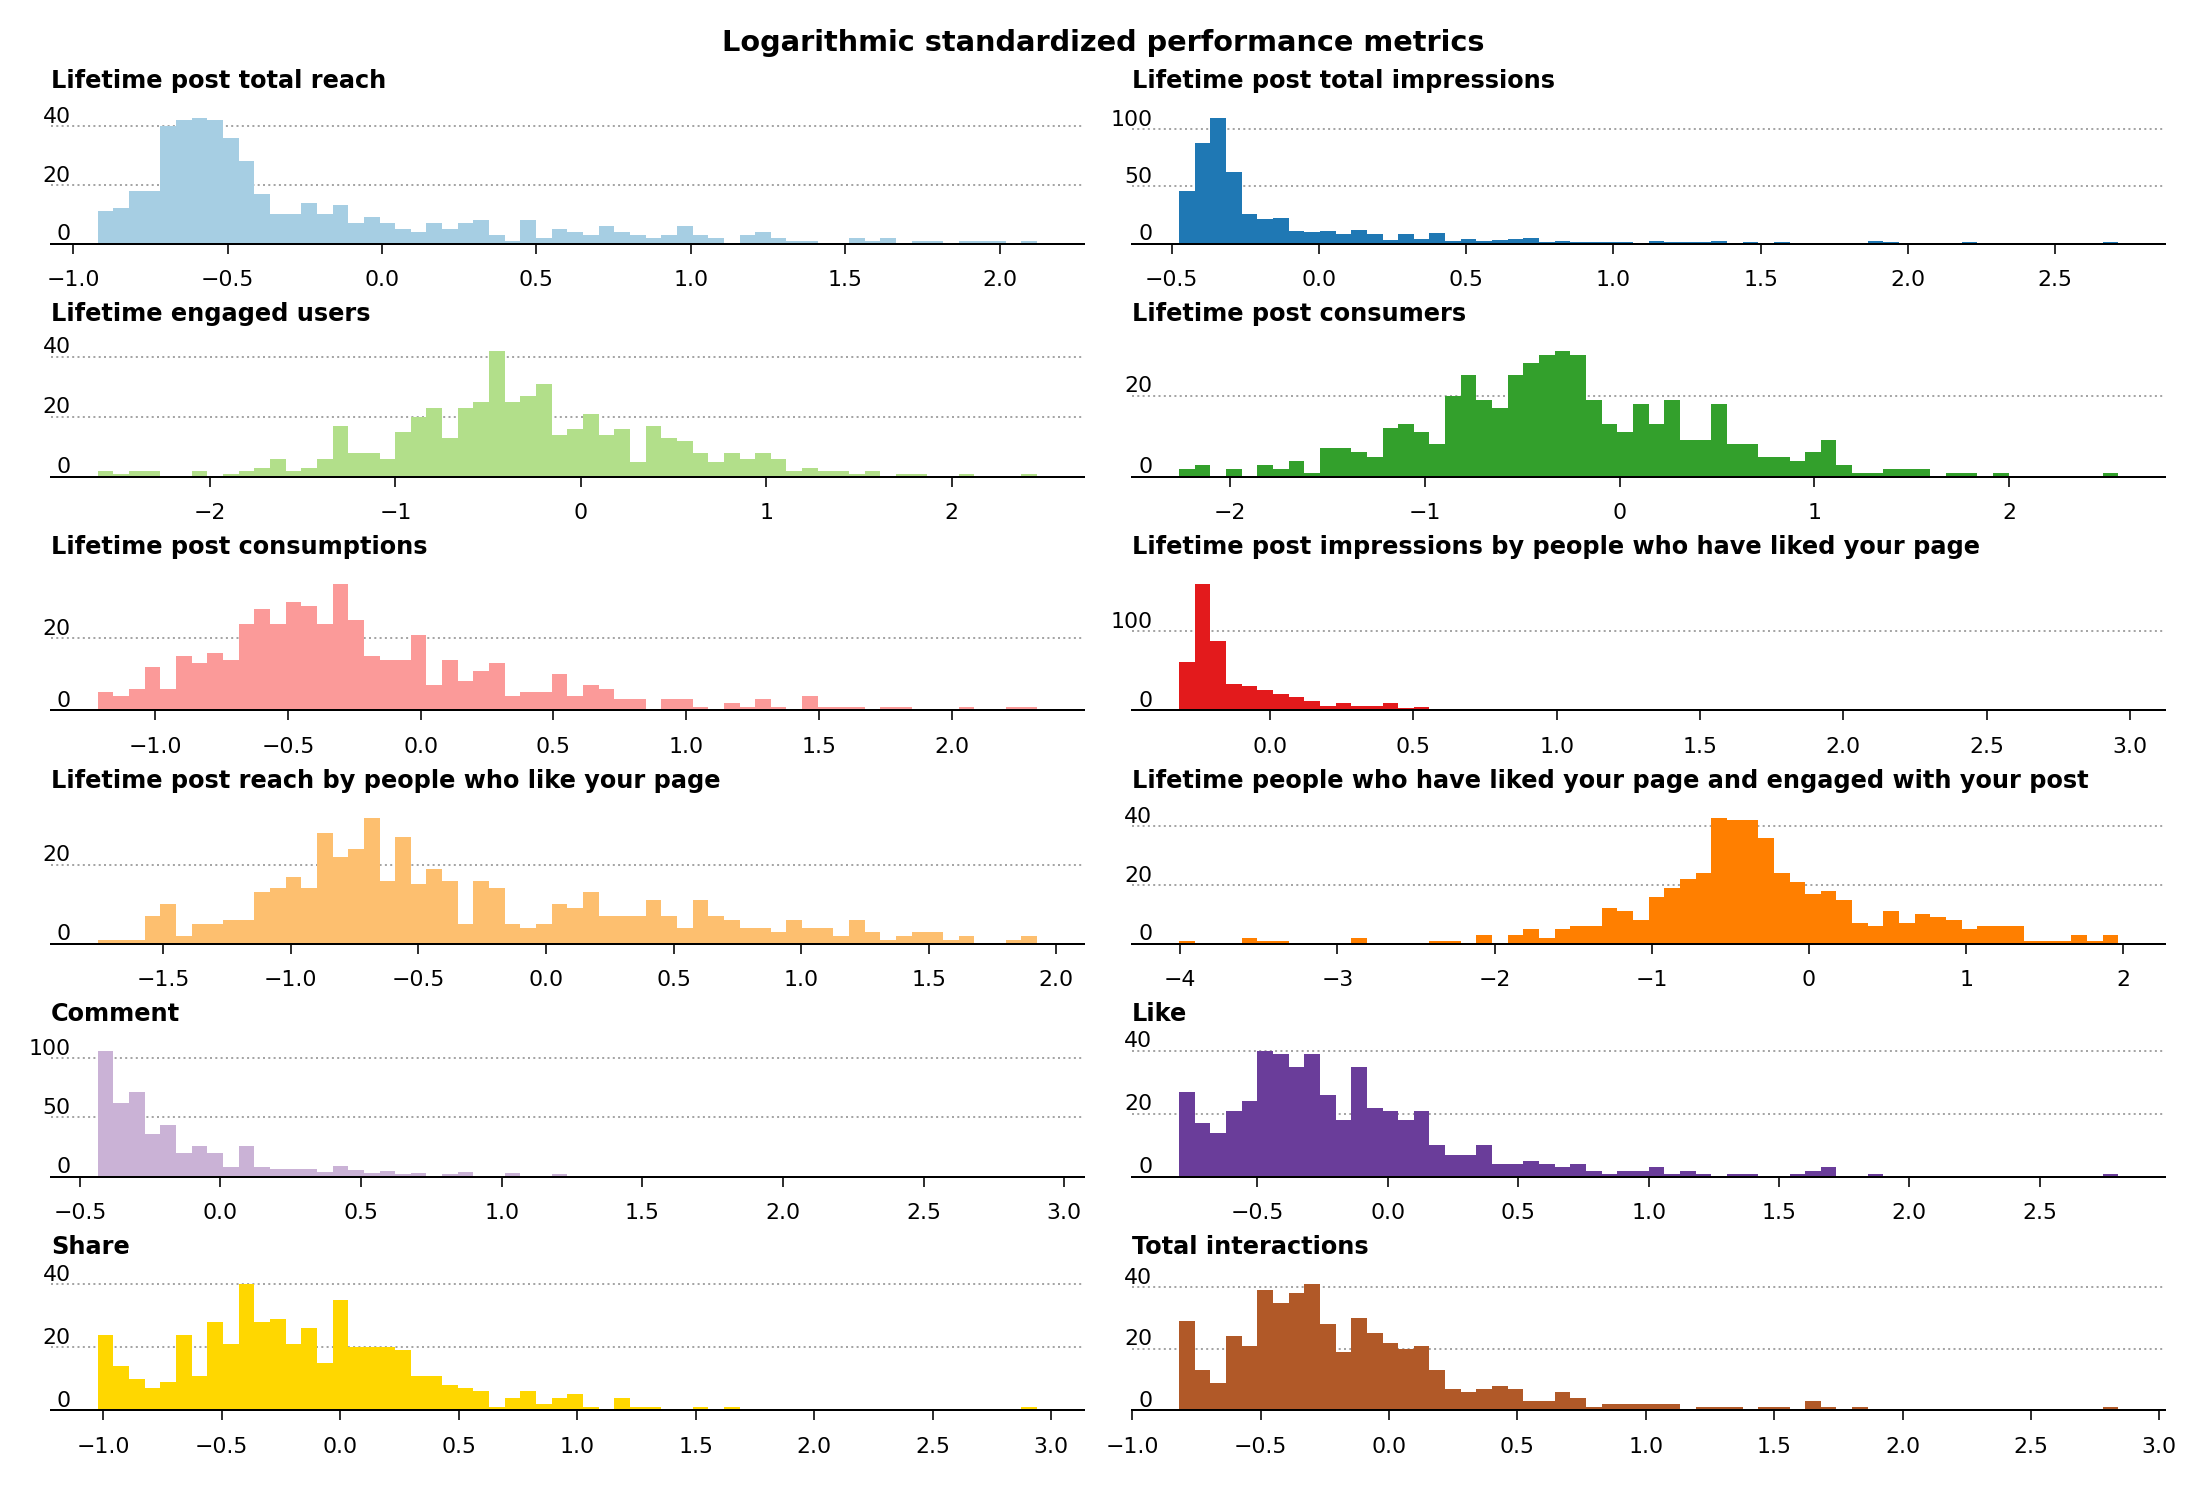 Distribution of logarithmic standardized performance metrics